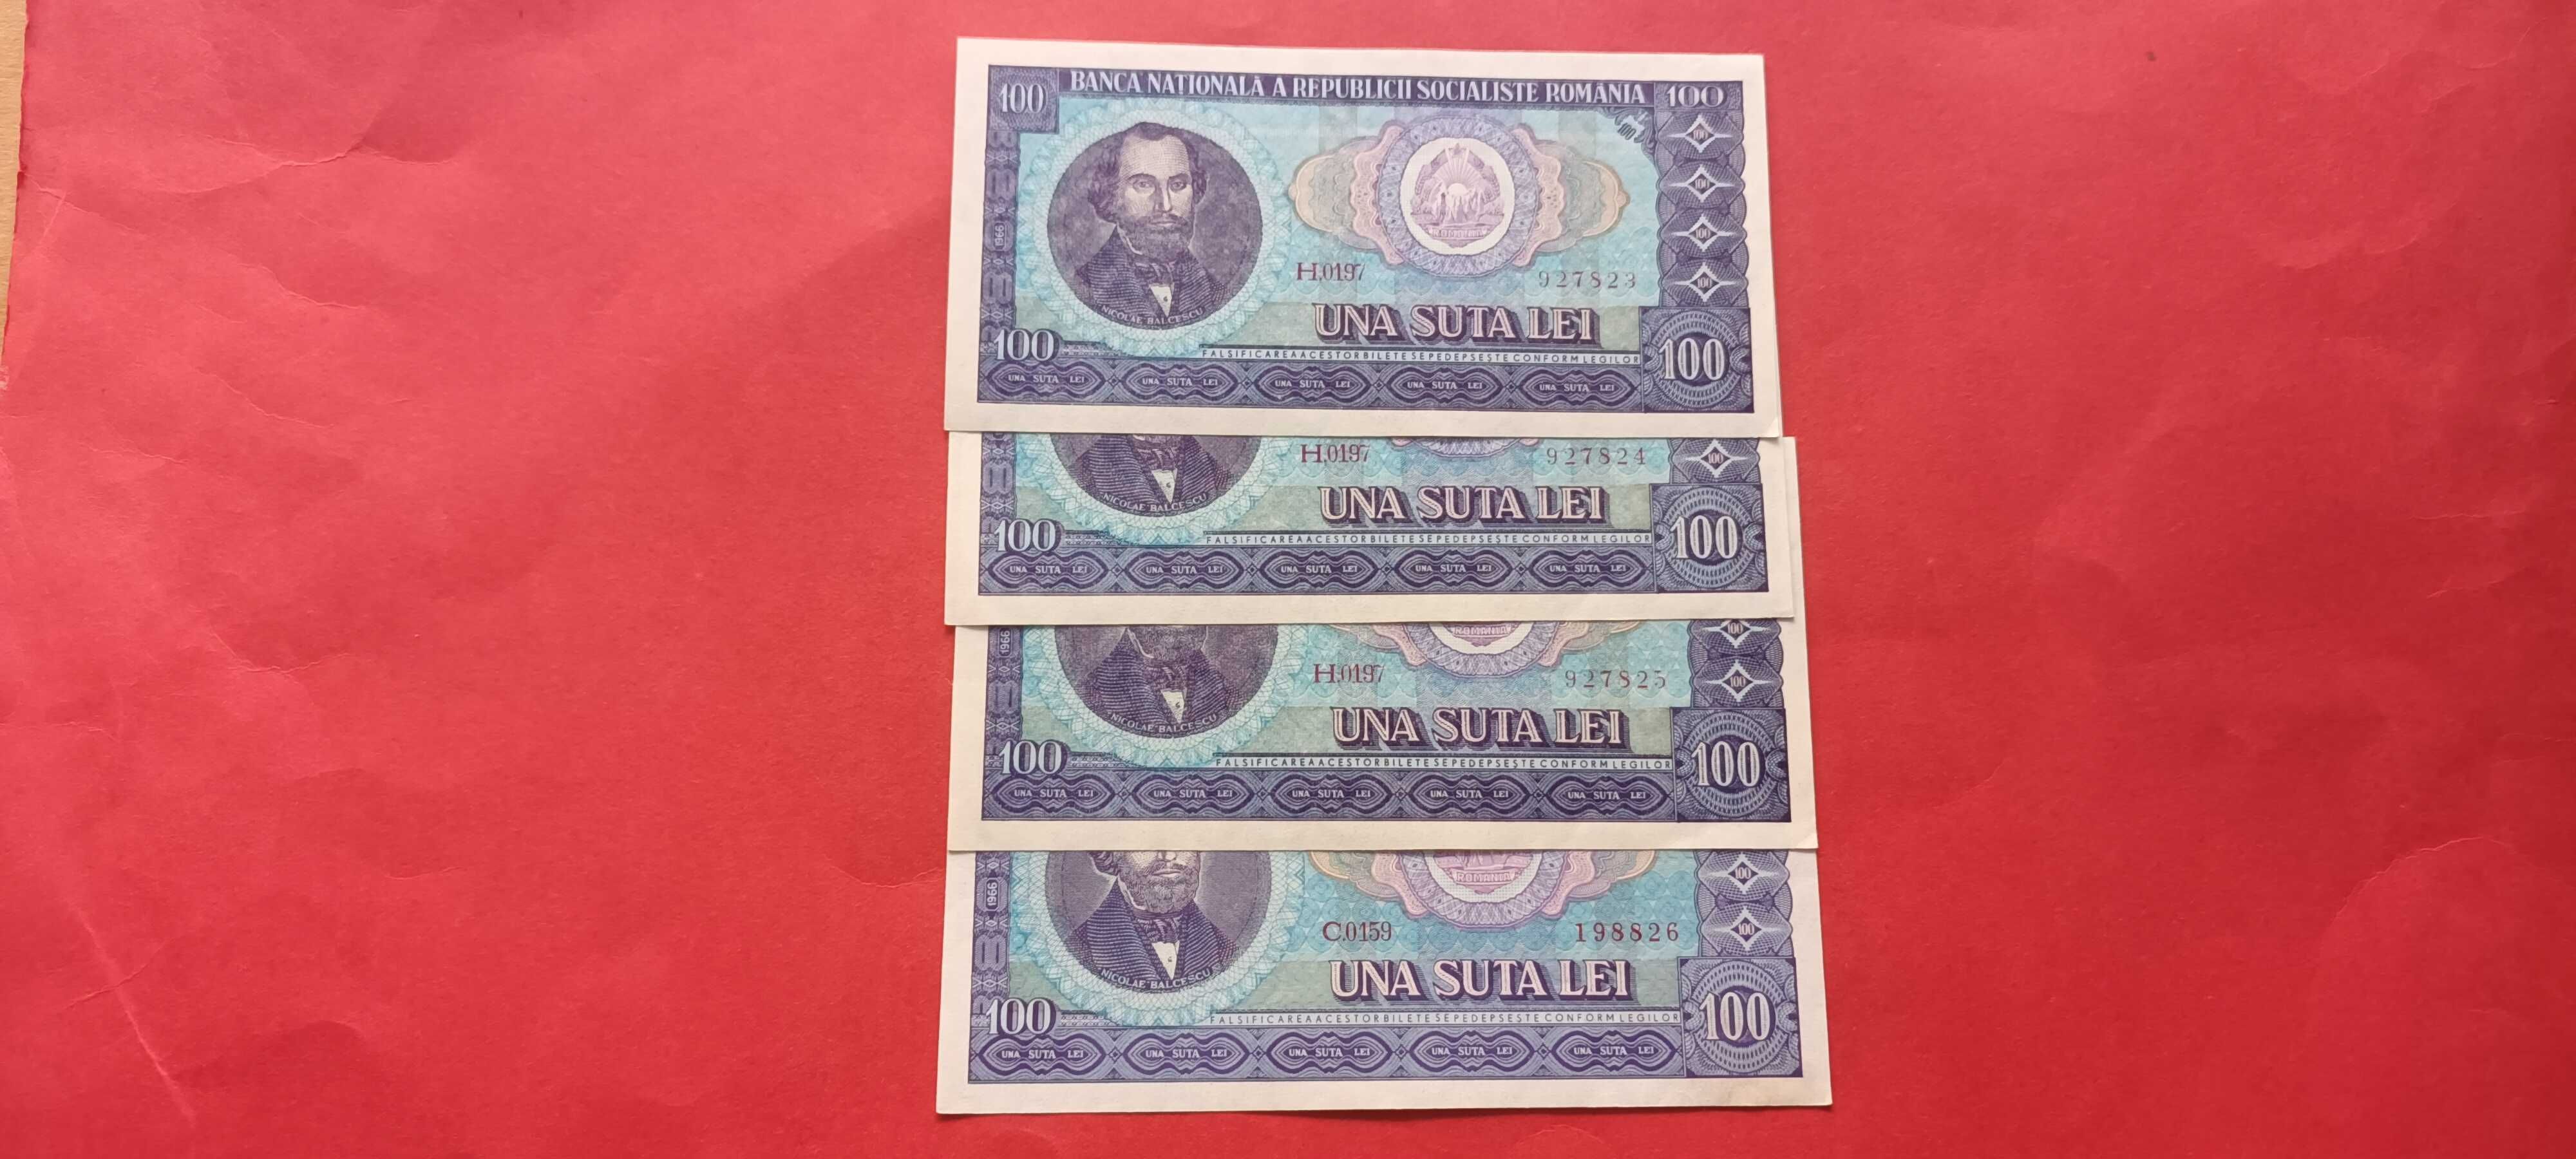 Bancnota 100 lei 1966 4 buc serie consecutiva